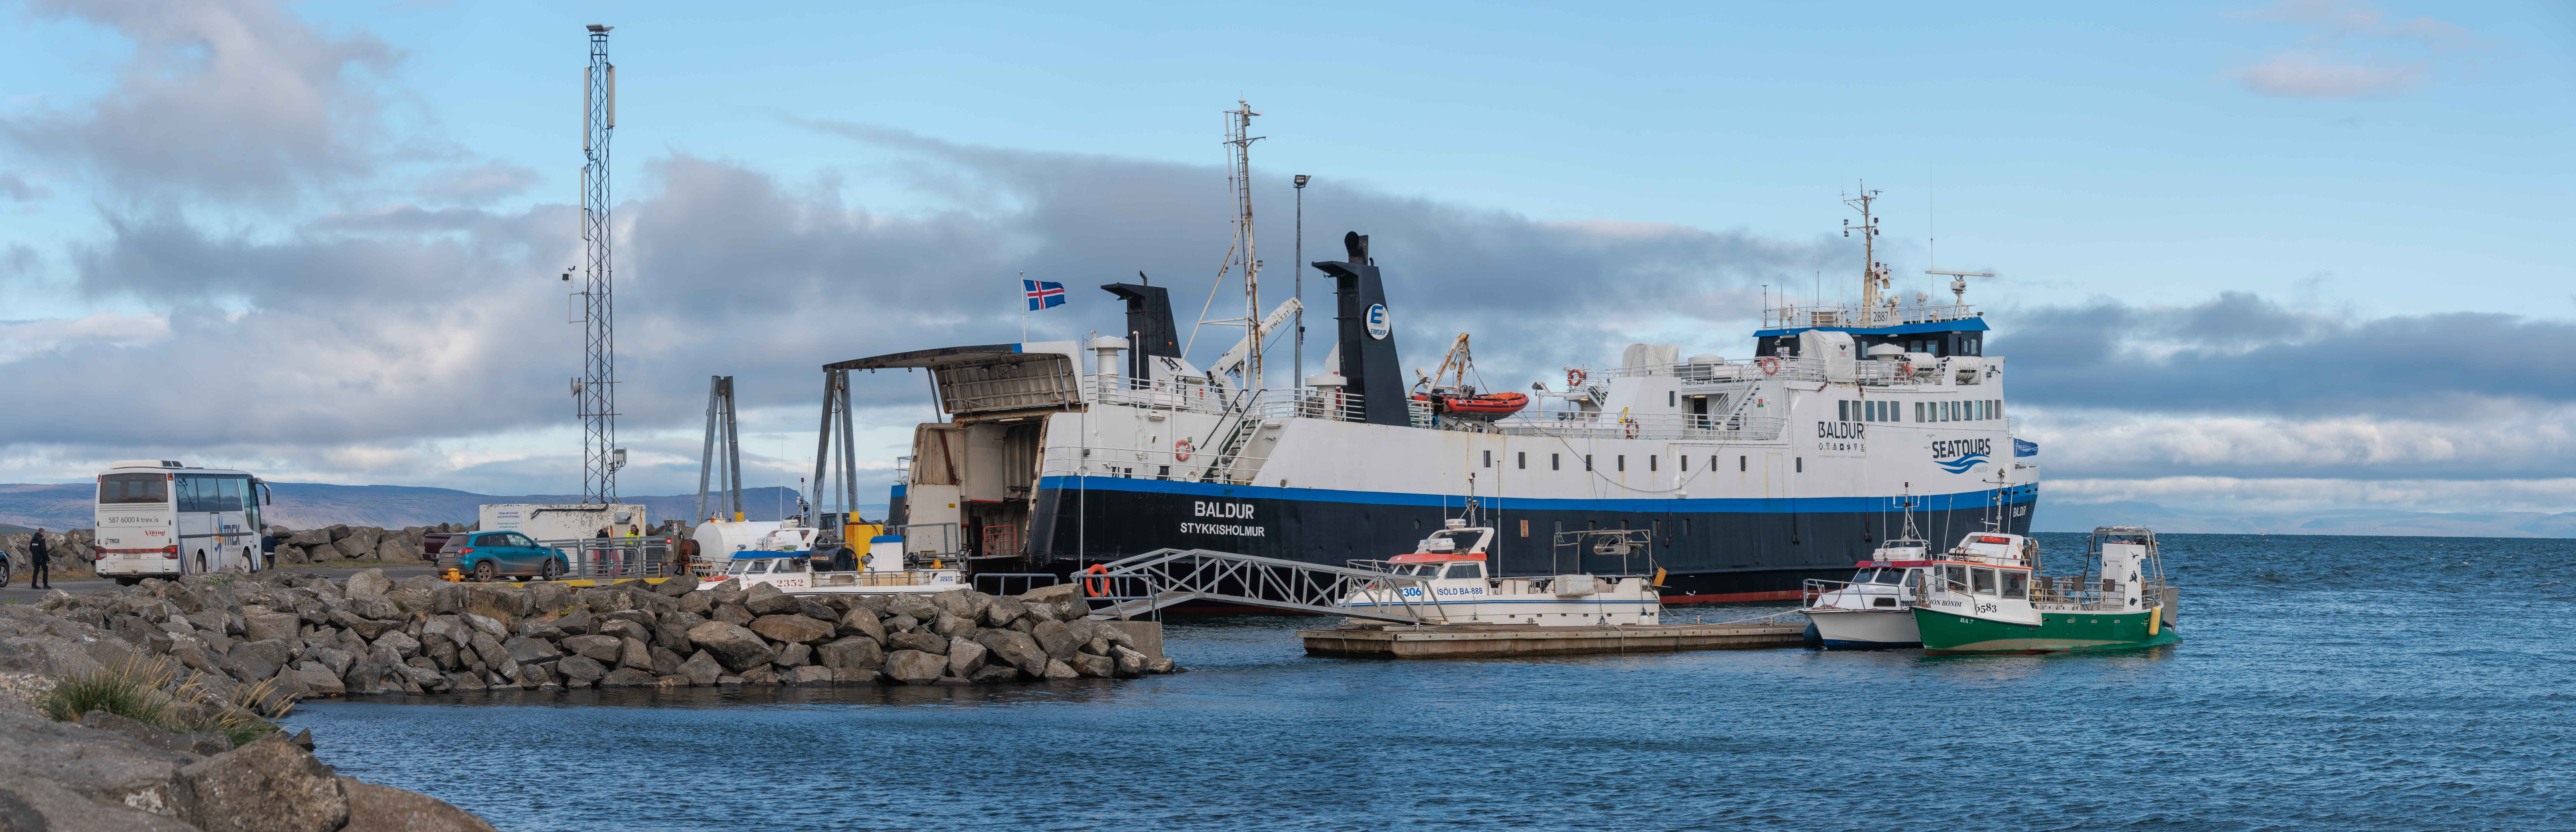 Garoar BA 64 shipwreck, Patreksfjoerour, Vestfiroir, Iceland Stock Photo -  Alamy